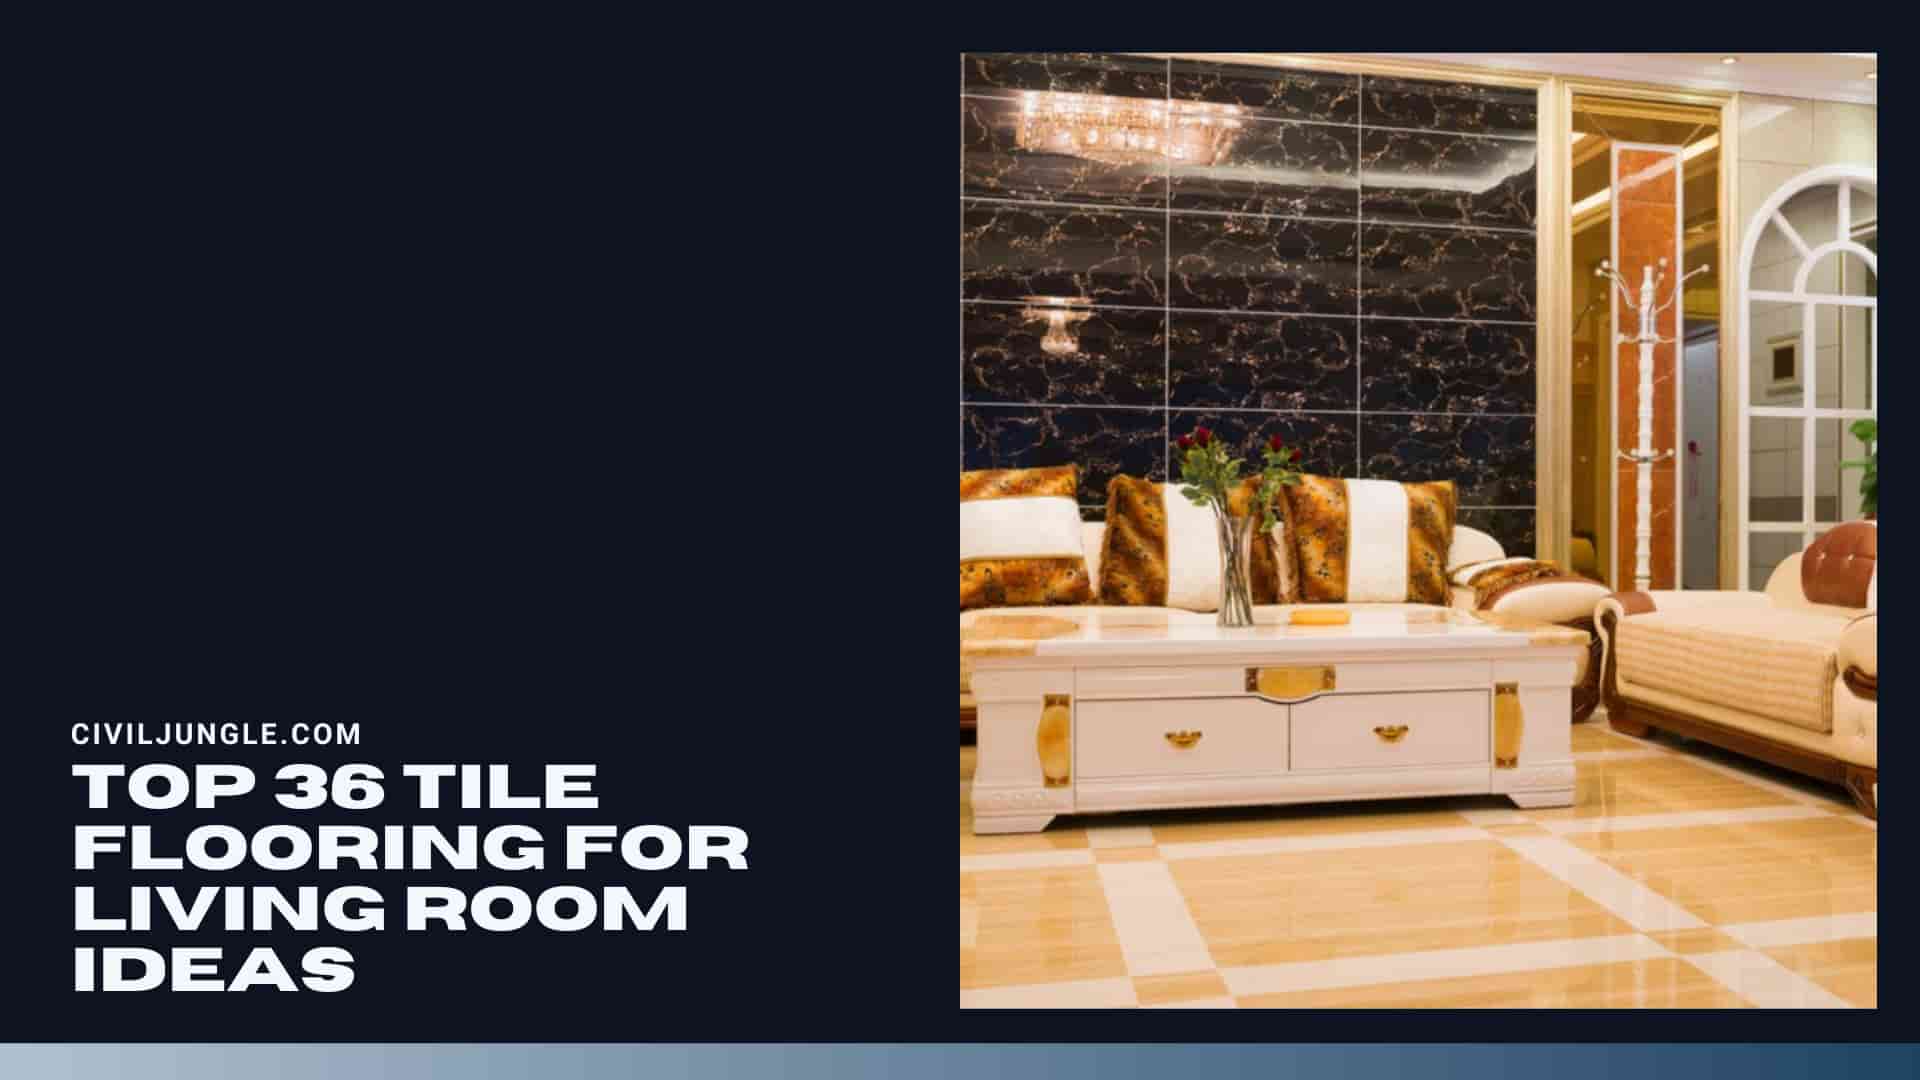 Top 36 Tile Flooring for Living Room Ideas